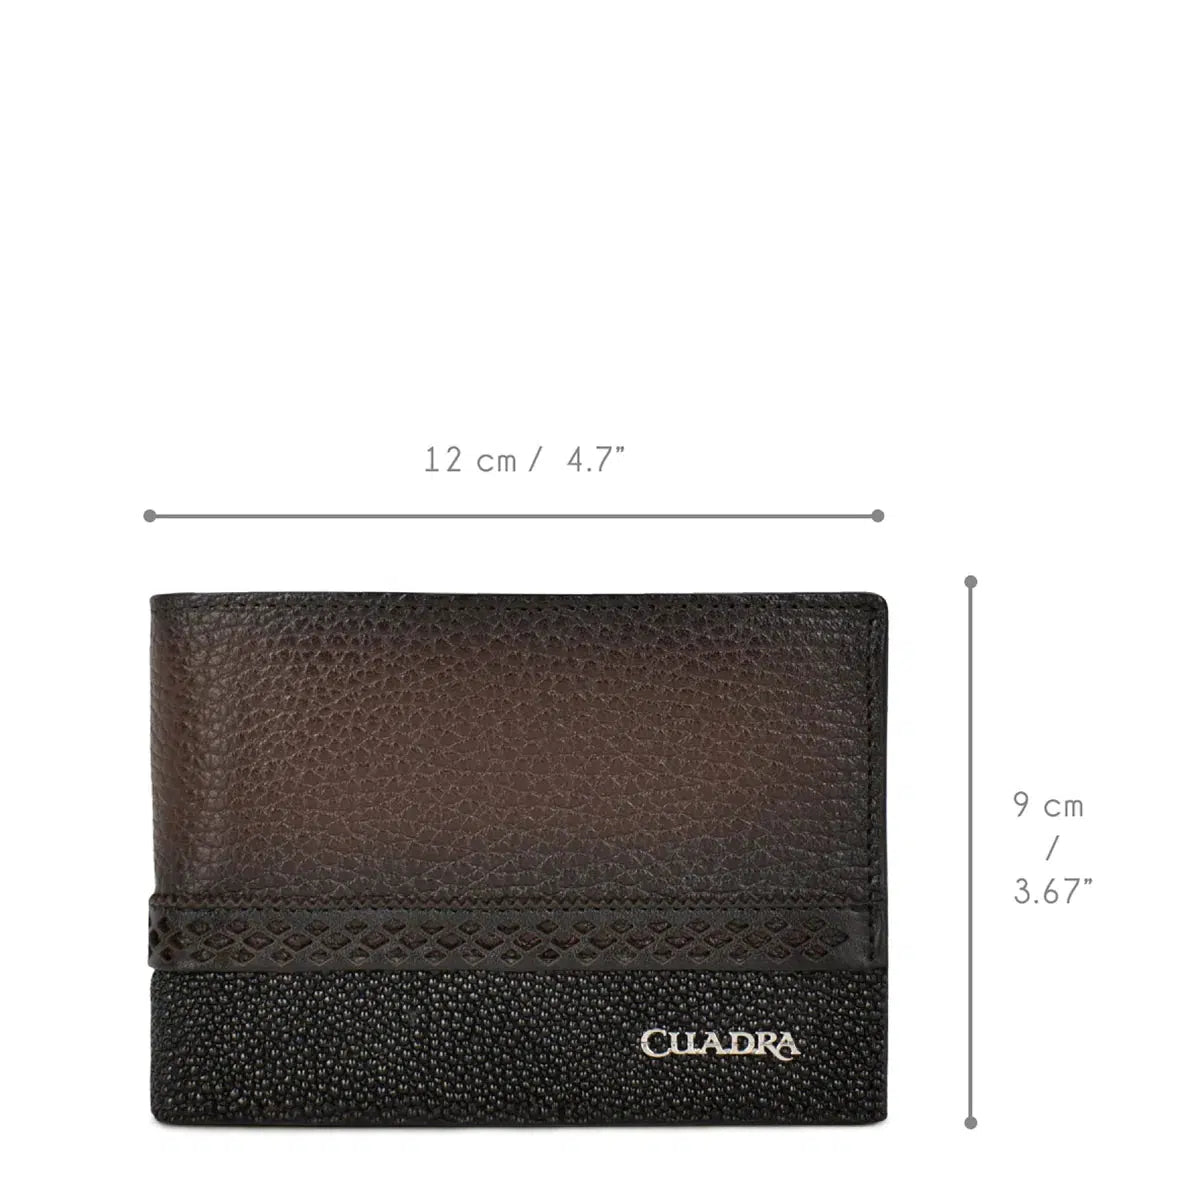 BC012MA - Cuadra black fashion stingray and deer leather bi fold wallet for men-CUADRA-Kuet-Cuadra-Boots